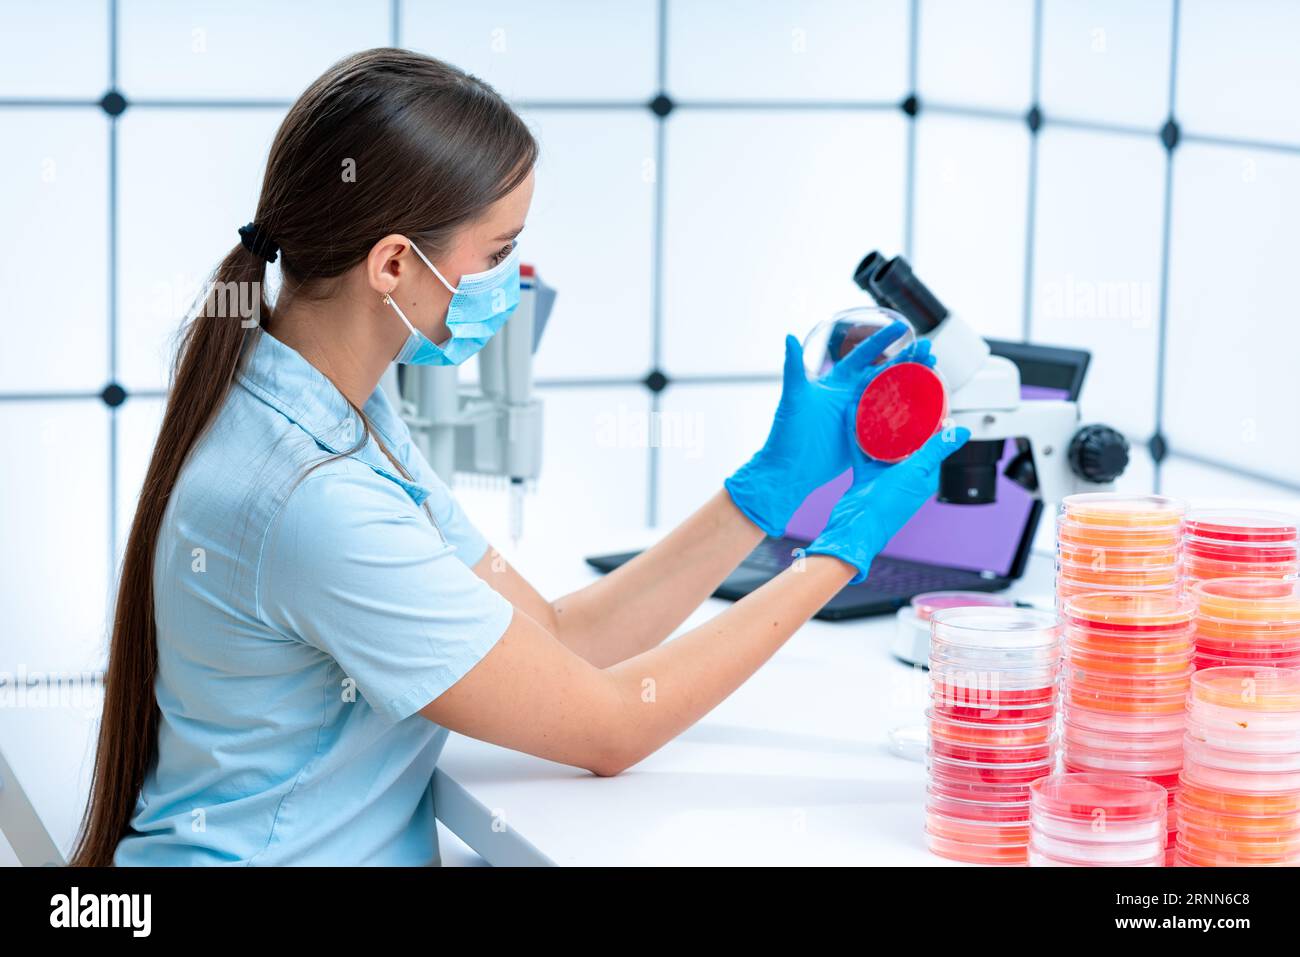 Esperimenti di ingegneria genetica: Le capsule di Petri sono utilizzate in esperimenti di ingegneria genetica per la crescita e la selezione di organici geneticamente modificati Foto Stock